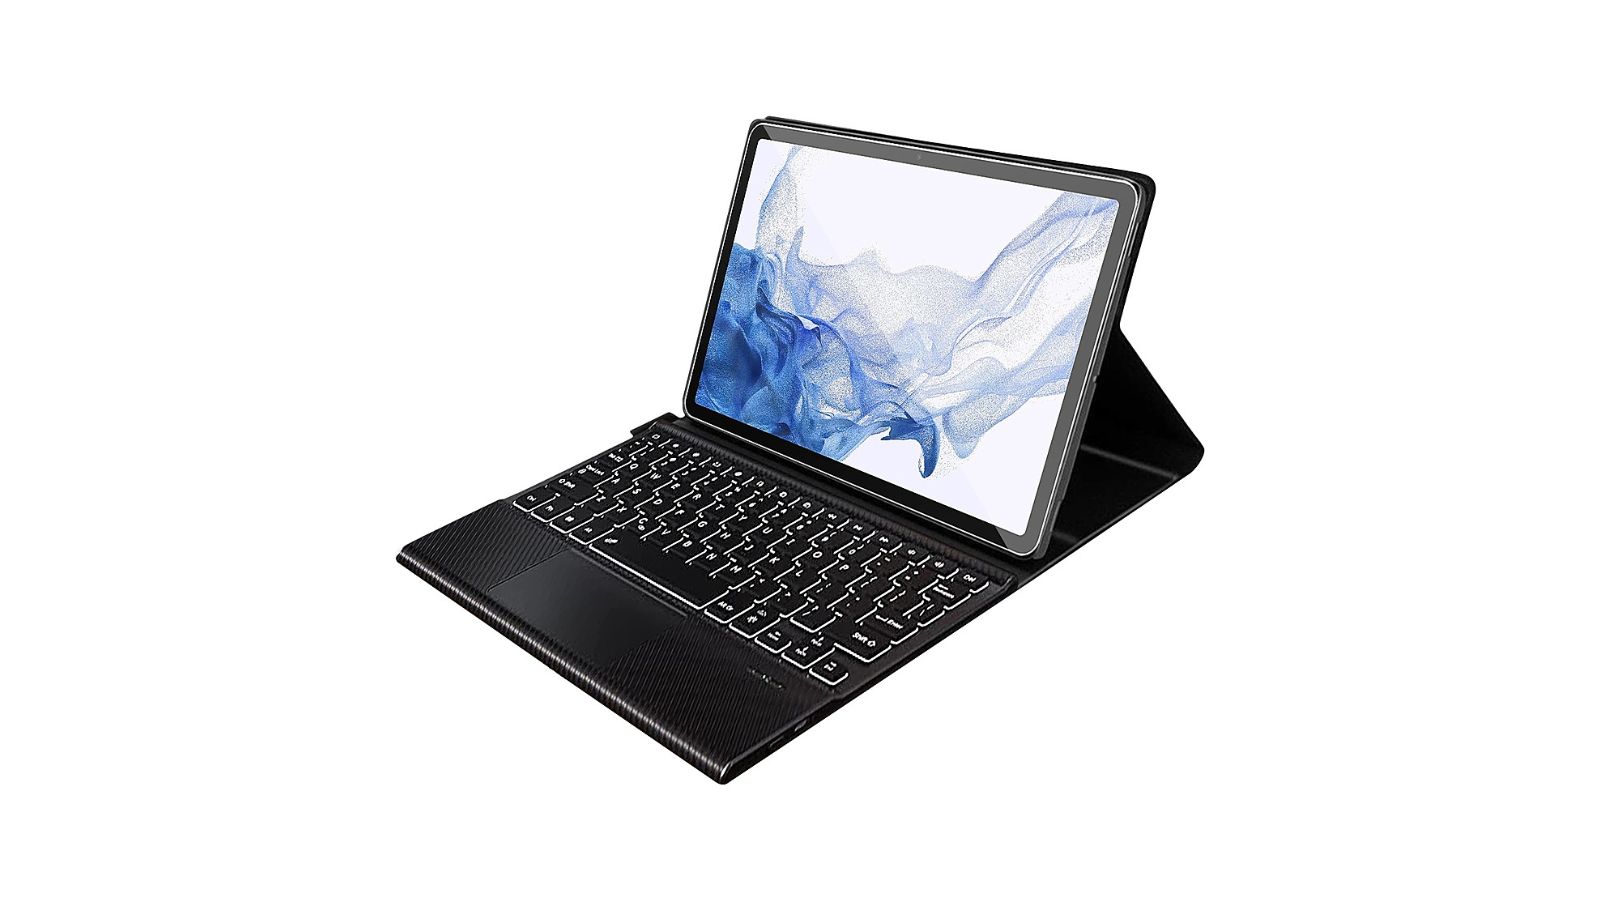 SaharaCase - Keyboard Folio Case for Apple iPad Pro 12.9 (5th Generation 2021) - BLACK.